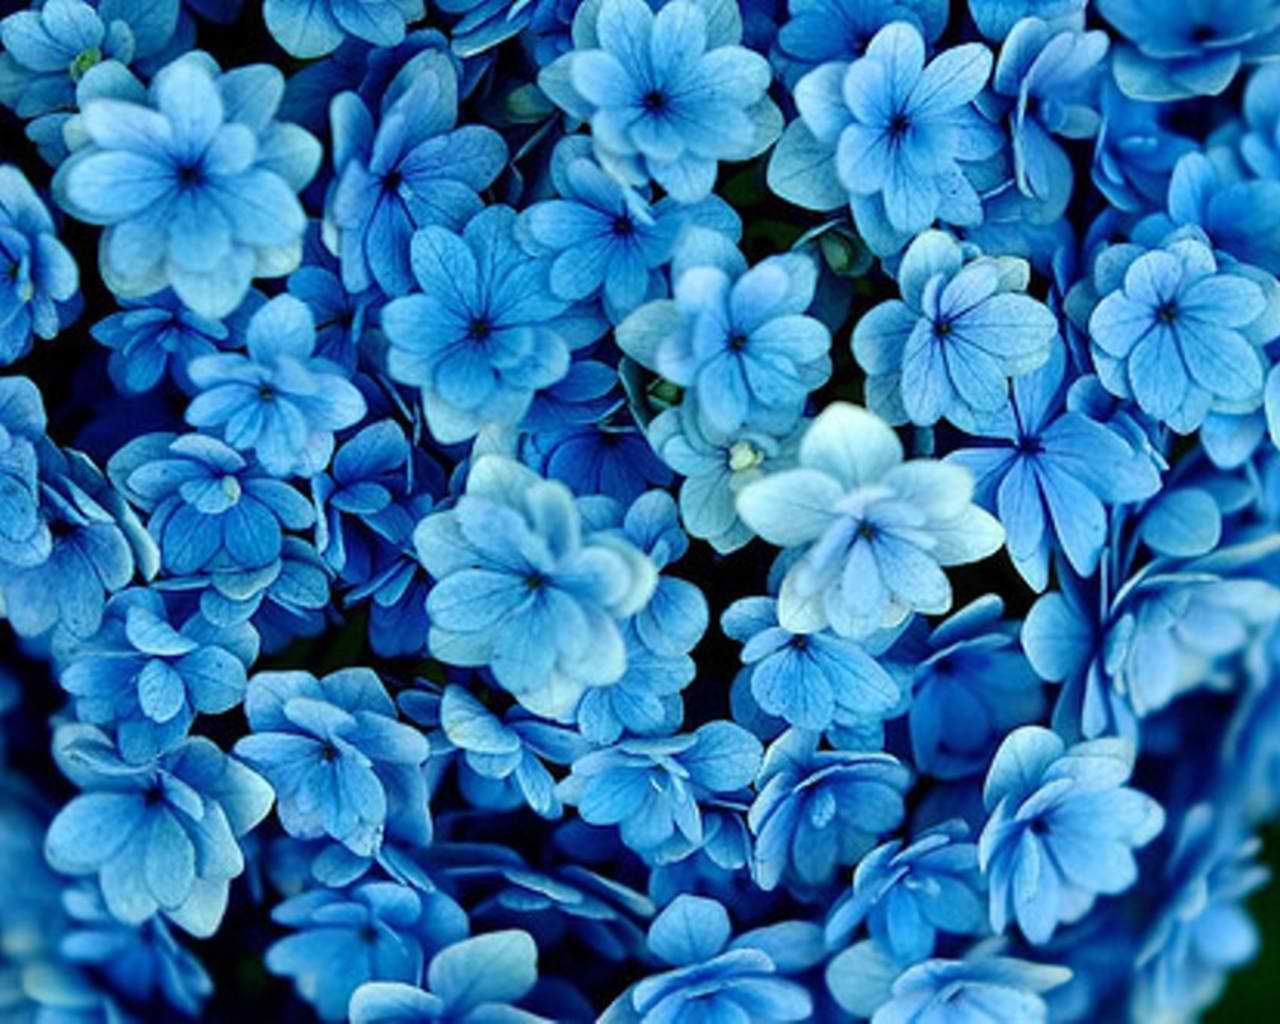 1557326 Blue Flower Wallpaper Images Stock Photos  Vectors   Shutterstock